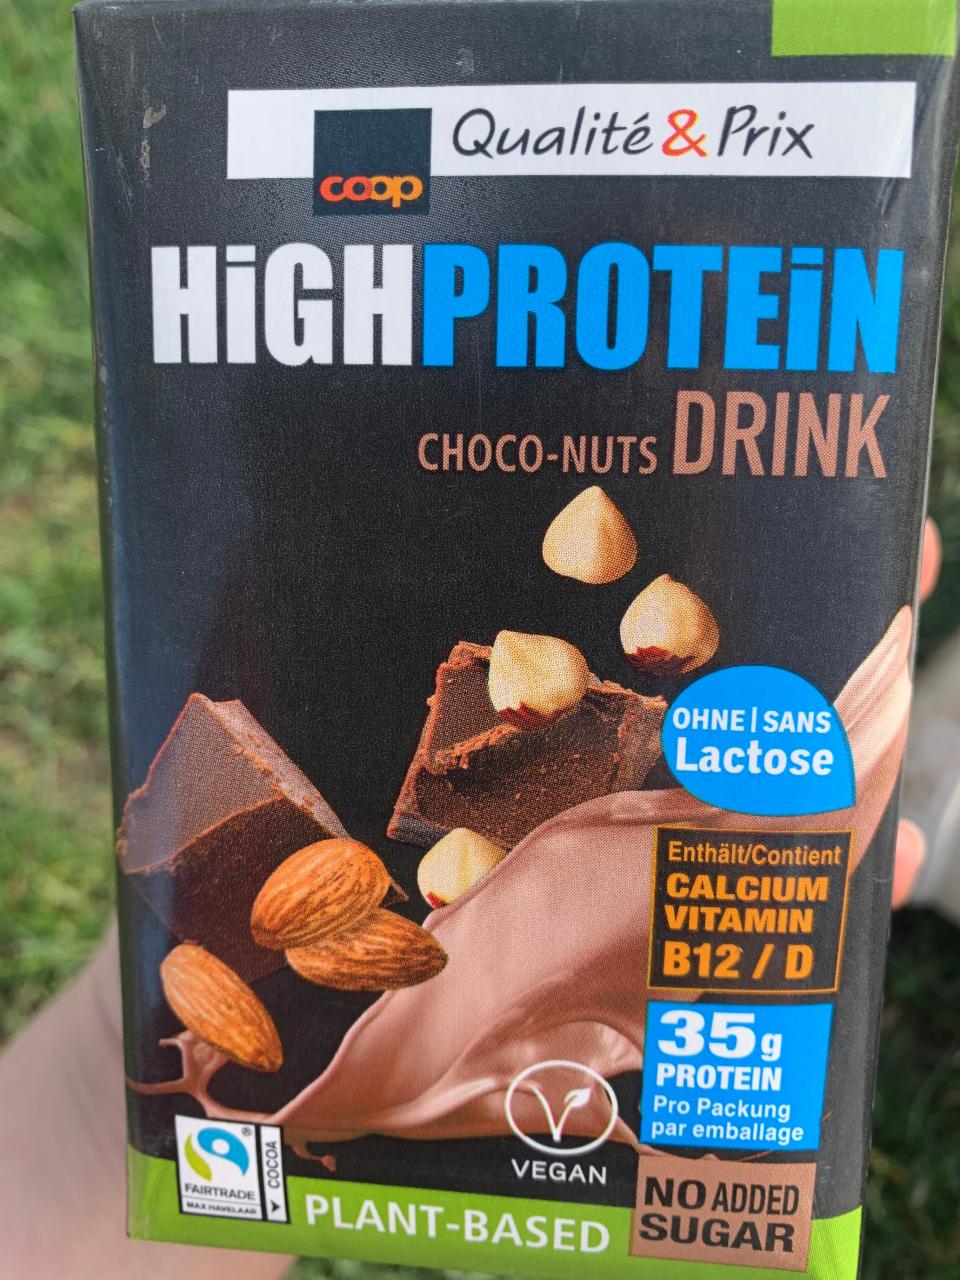 Fotografie - High Protein Choco-Nuts Drink Coop Qualité & Prix